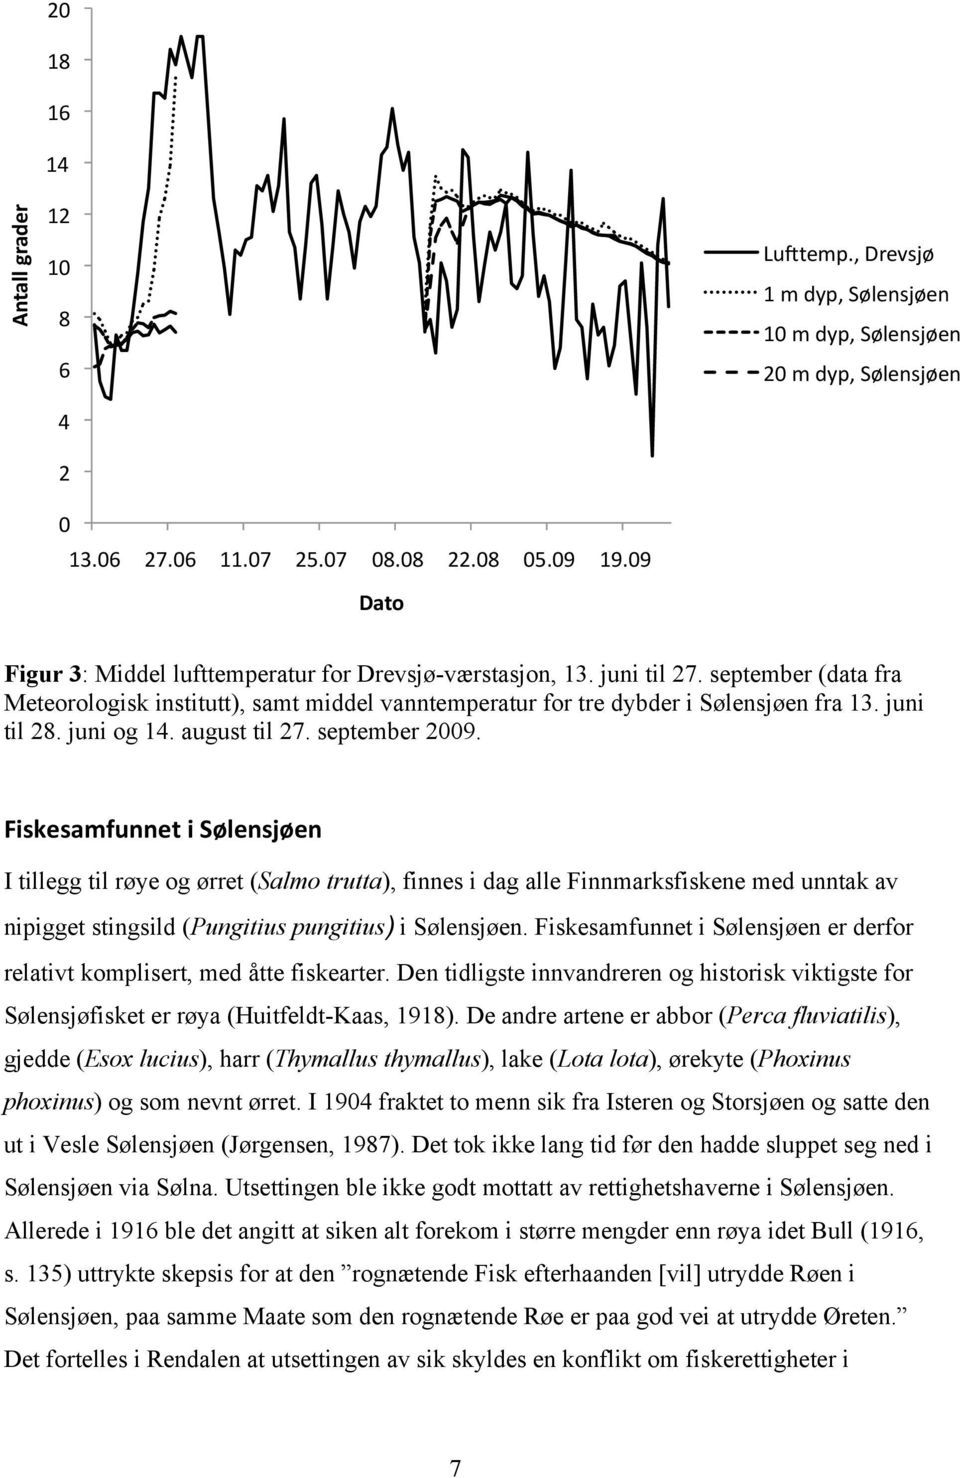 september (data fra Meteorologisk institutt), samt middel vanntemperatur for tre dybder i Sølensjøen fra 13. juni til 28. juni og 14. august til 27. september 2009.